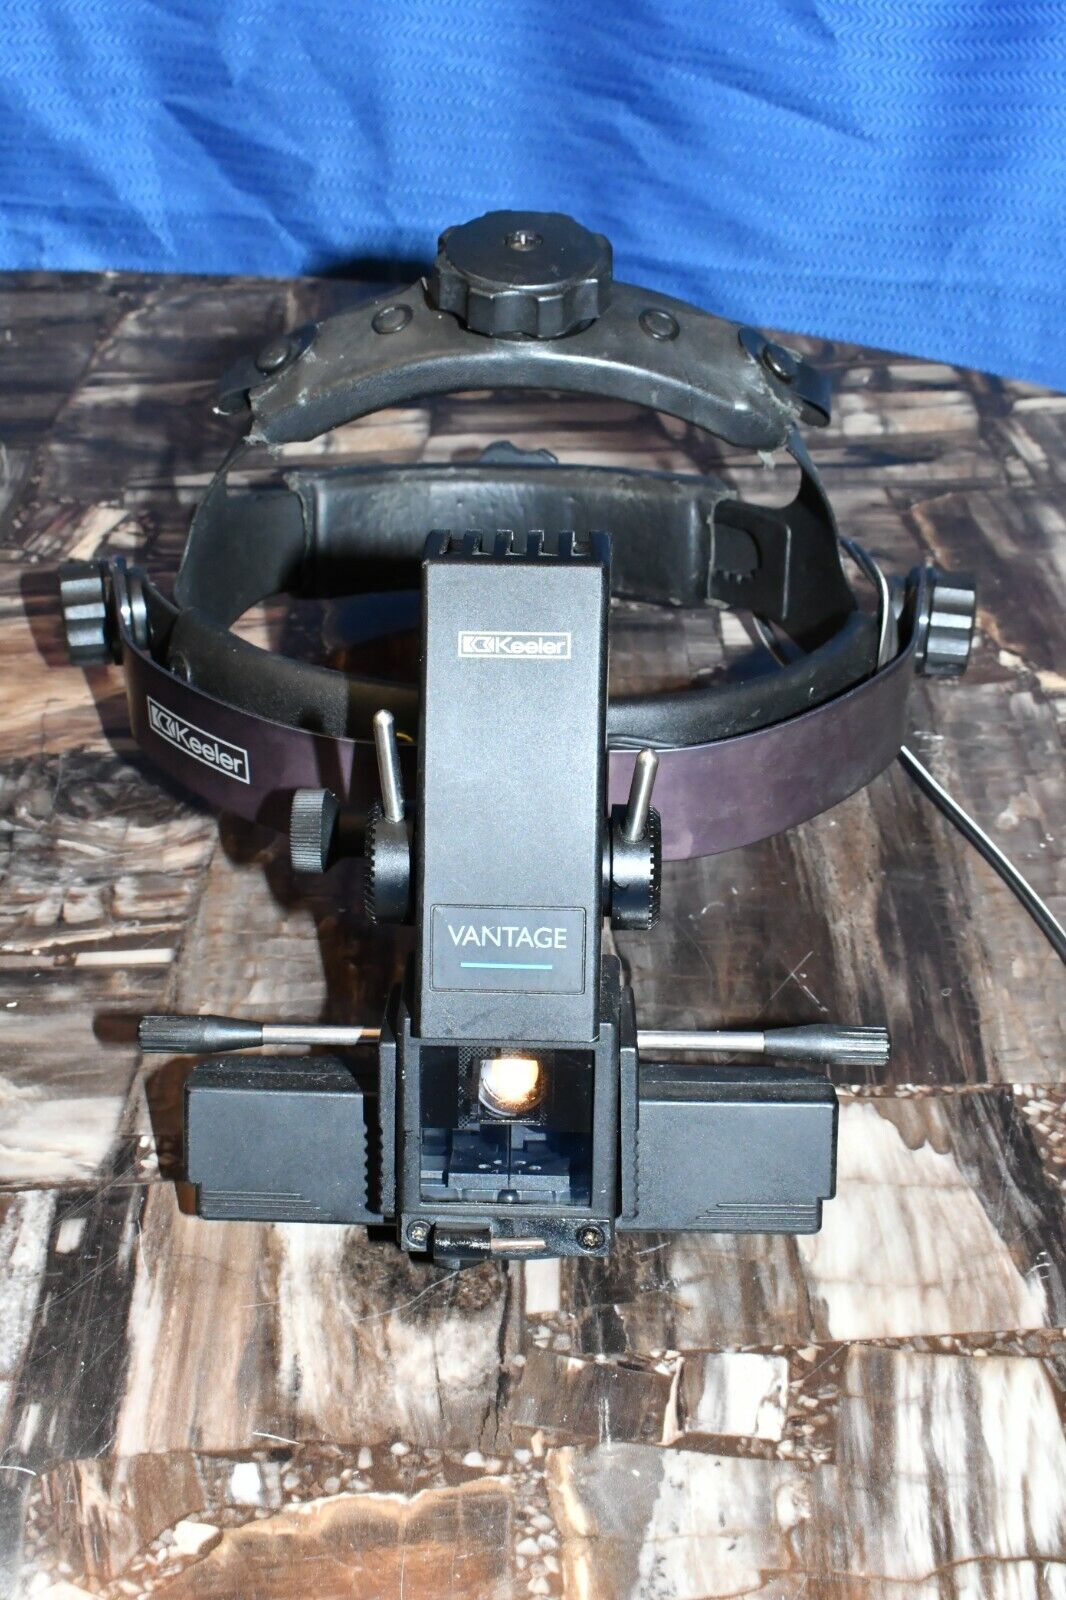 Keeler Vantage Binocular Indirect Ophthalmoscope